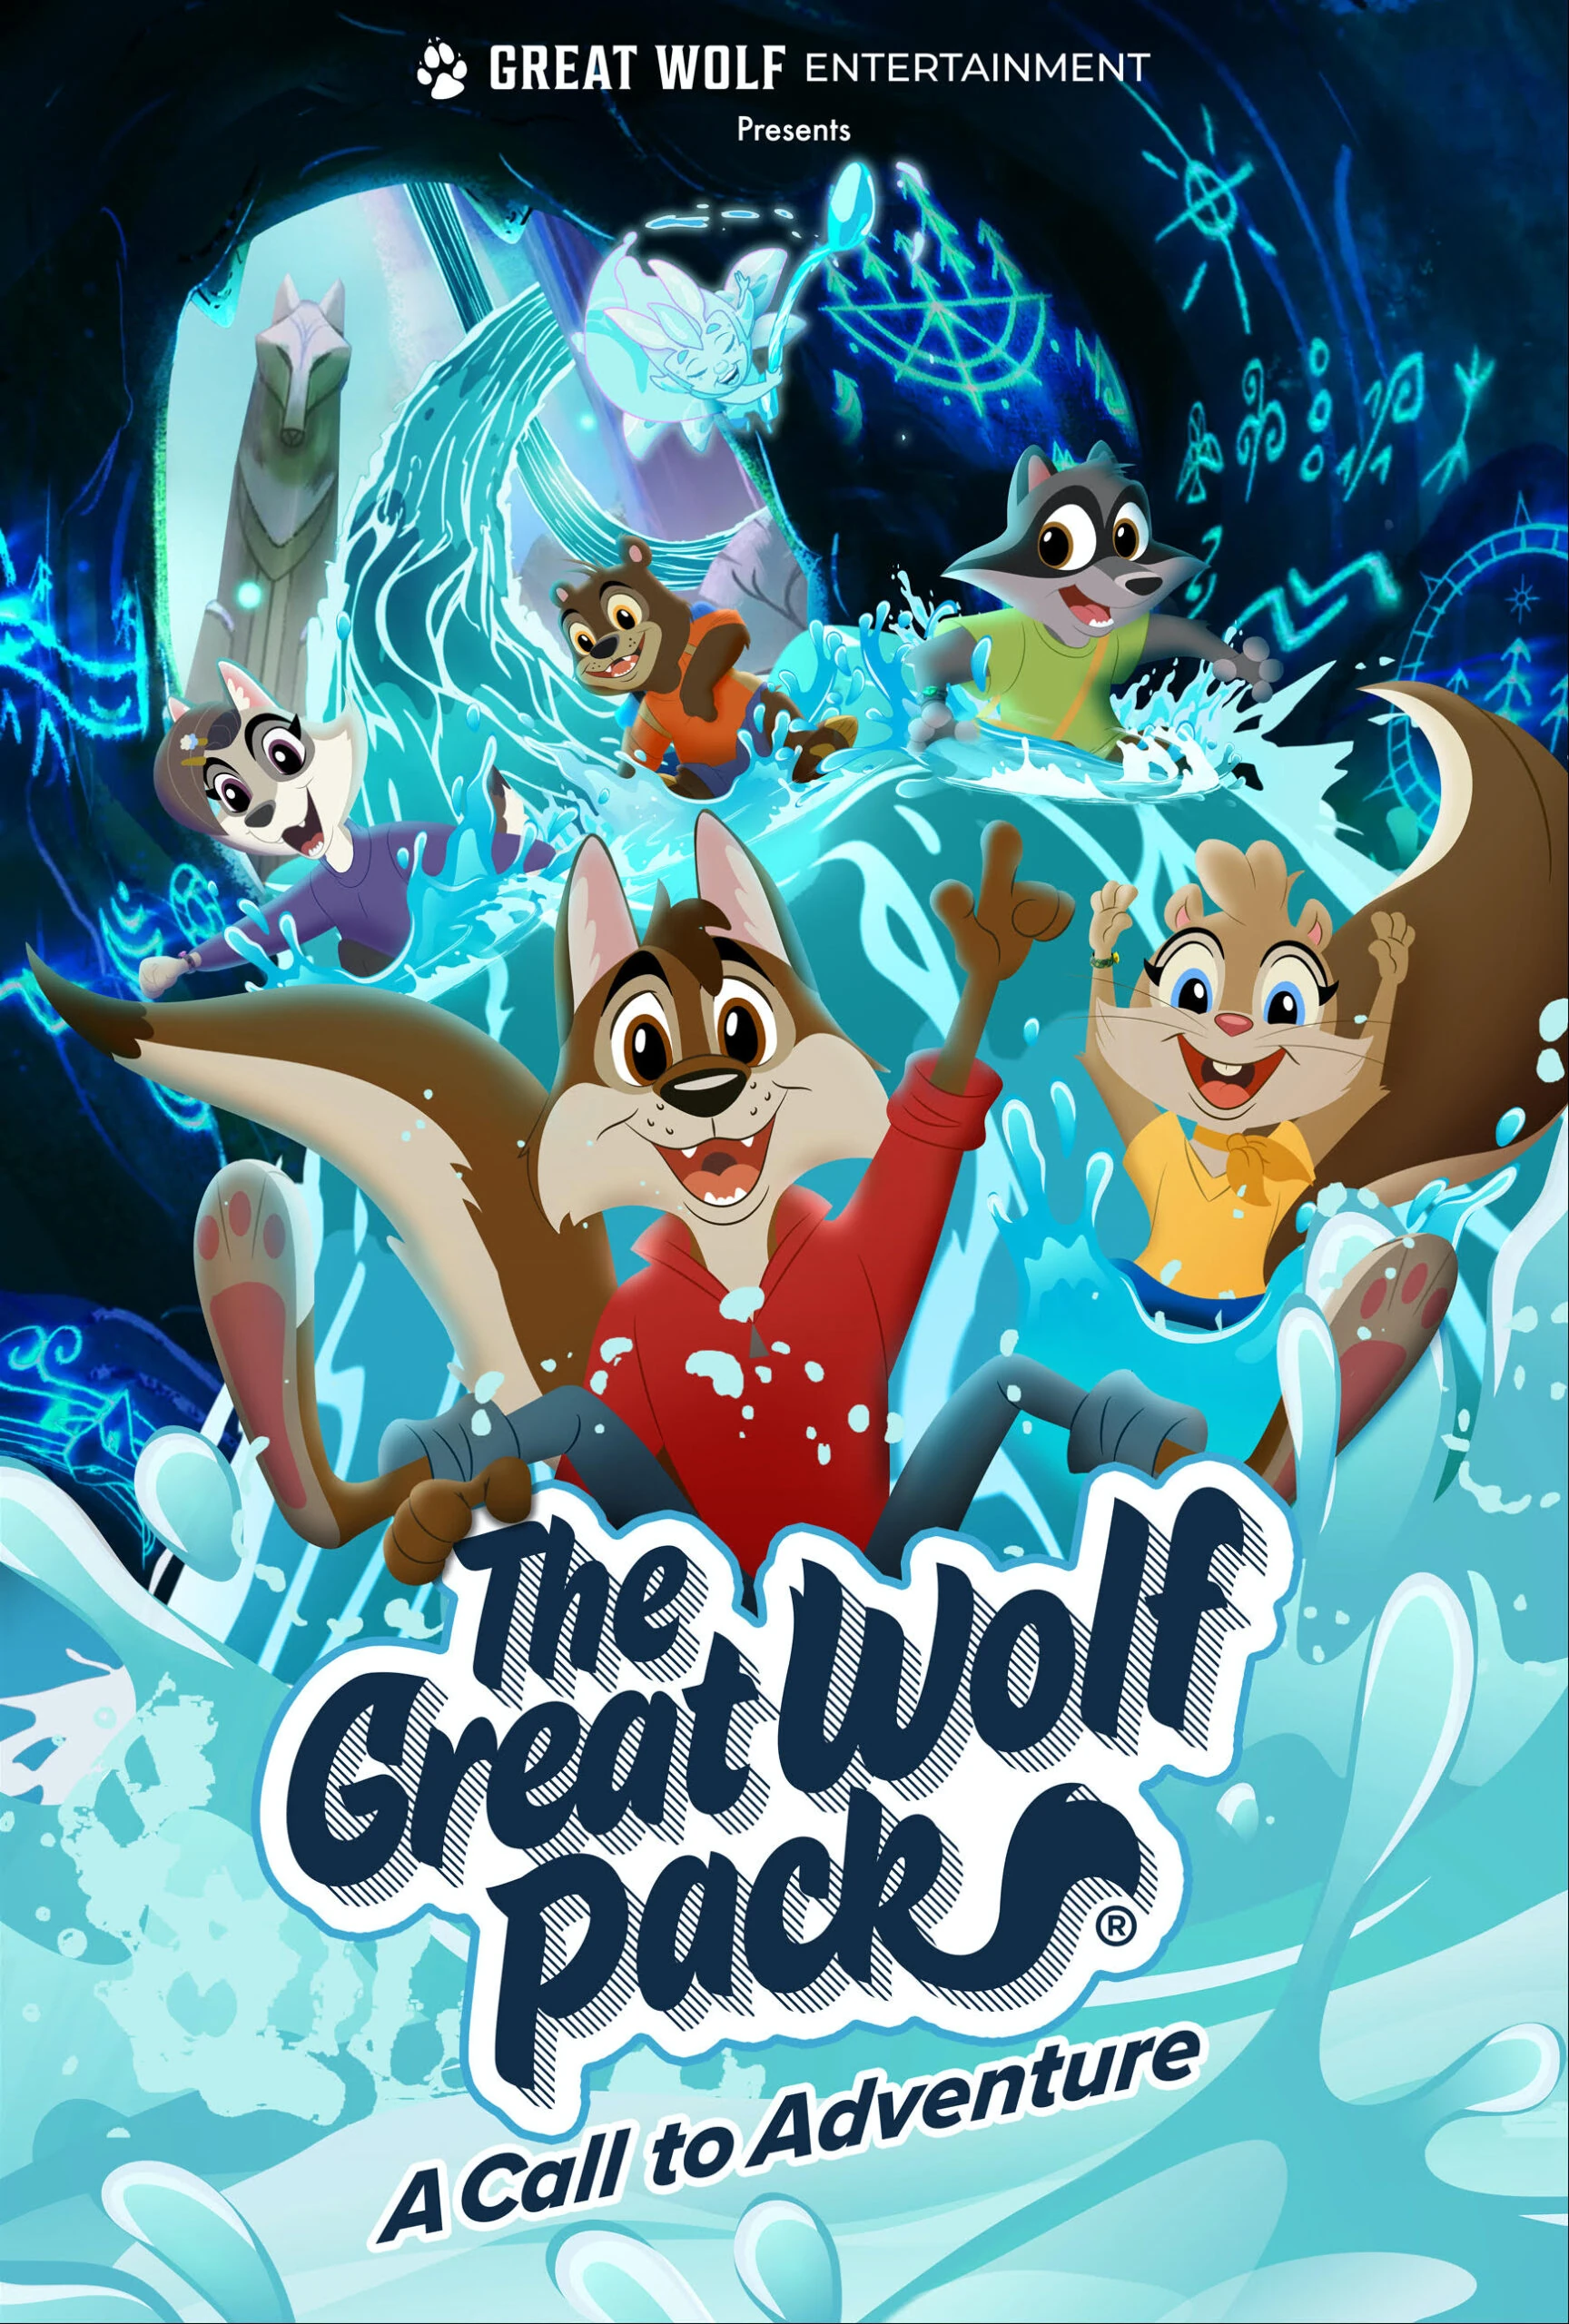 Steam Workshop::The Wolf Pack